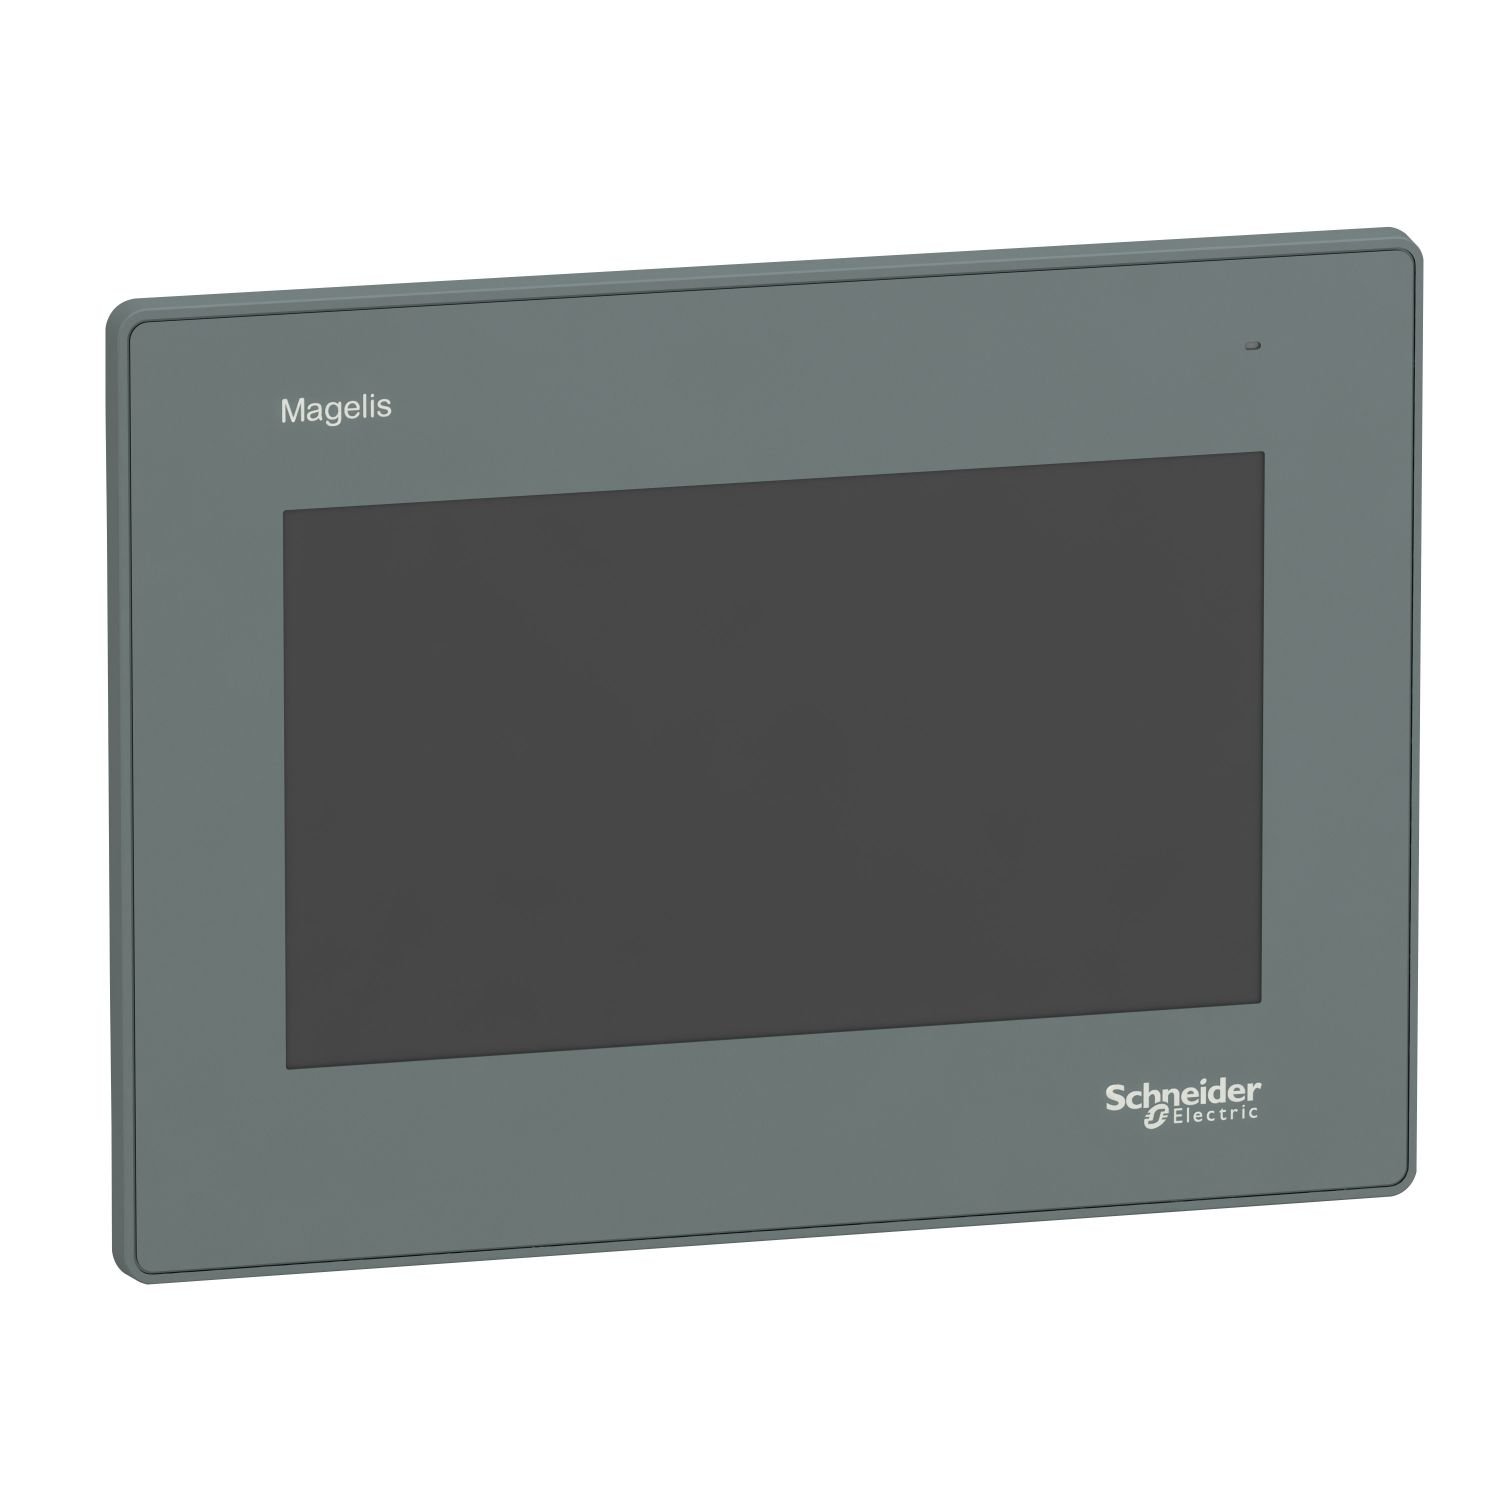 HMIGXU3512 7 inch wide screen, Universal model, 2 serial ports,1 Ethernet port, embeddedRTC